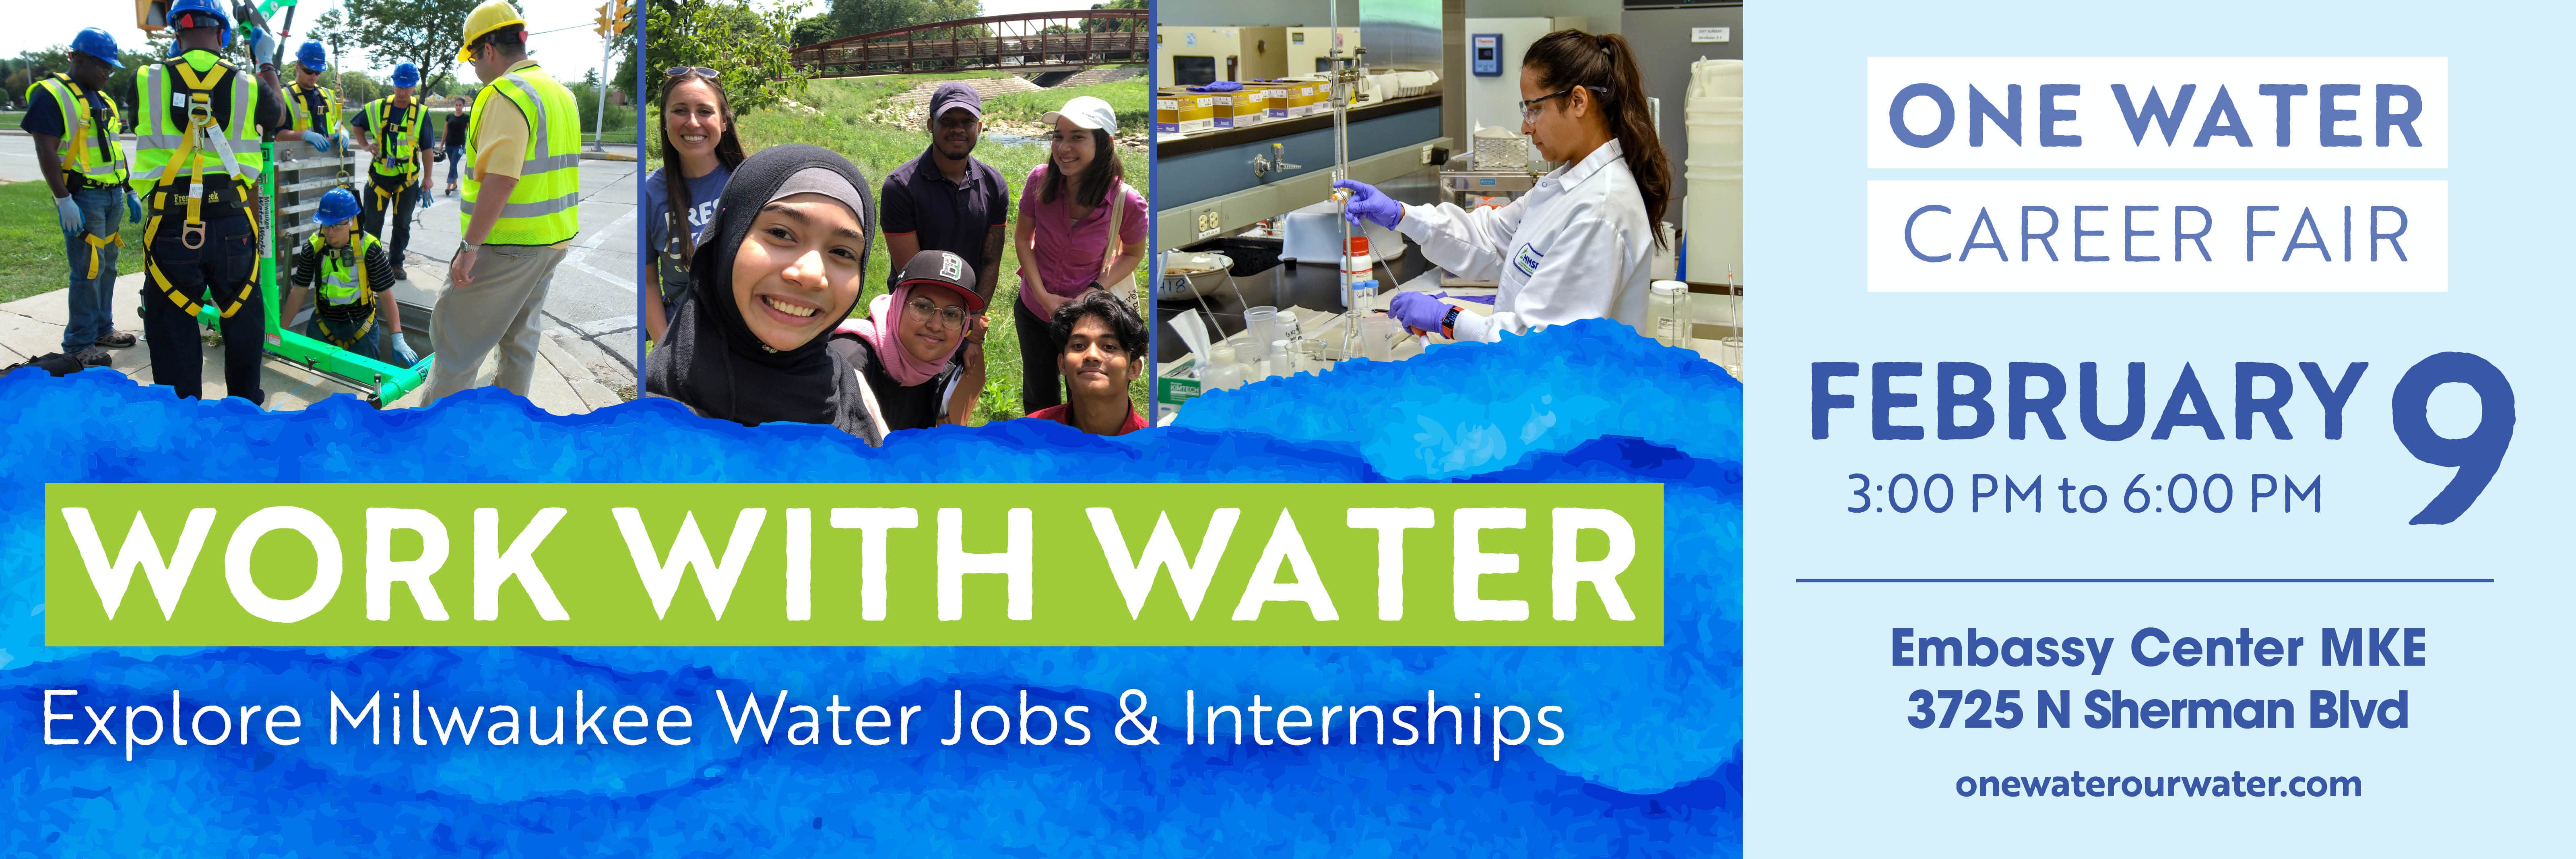 Work With Water Career Fair Milwaukee Jobs and Internships